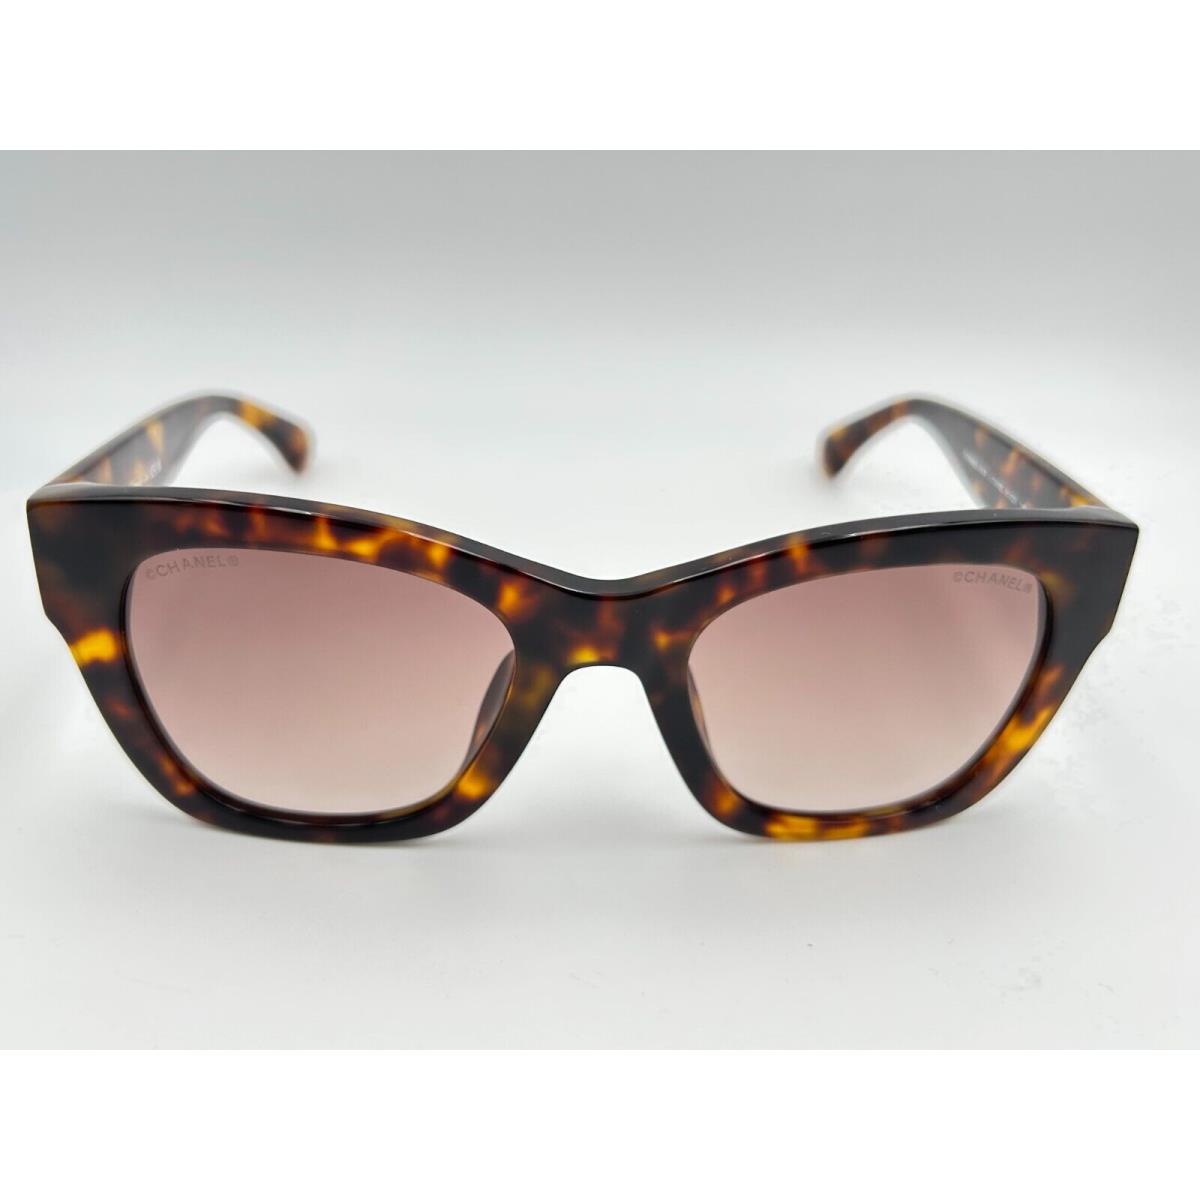 Chanel Sunglasses 5478 714/S5 Tortoise Brown Gradient Square